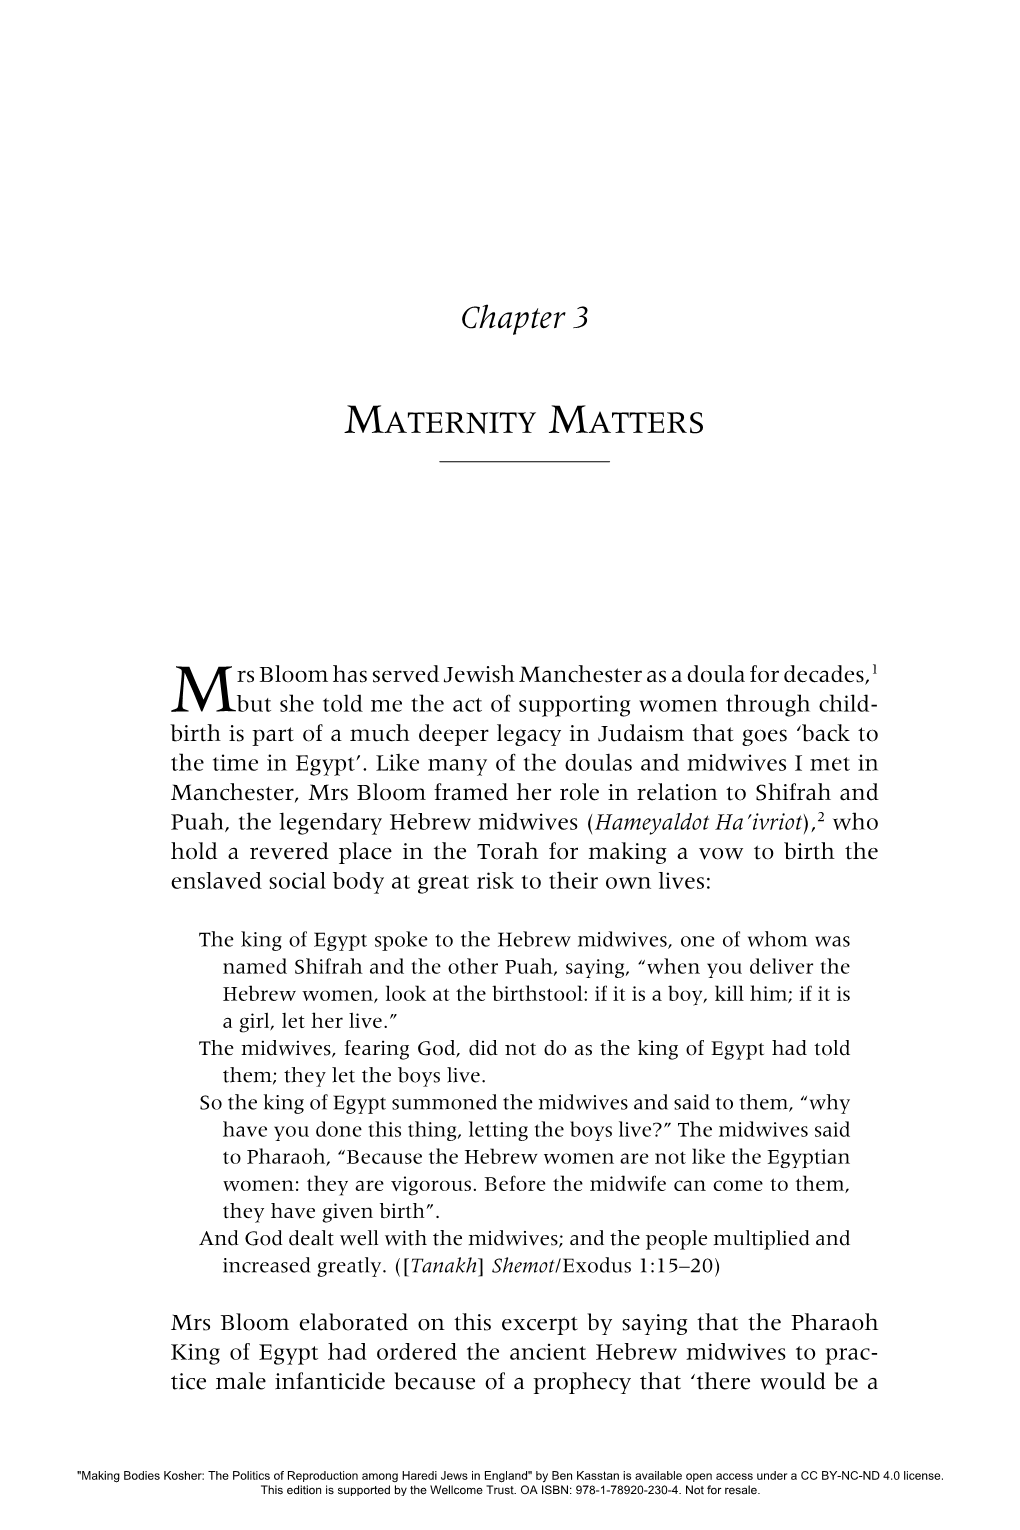 Chapter 3. Maternity Matters